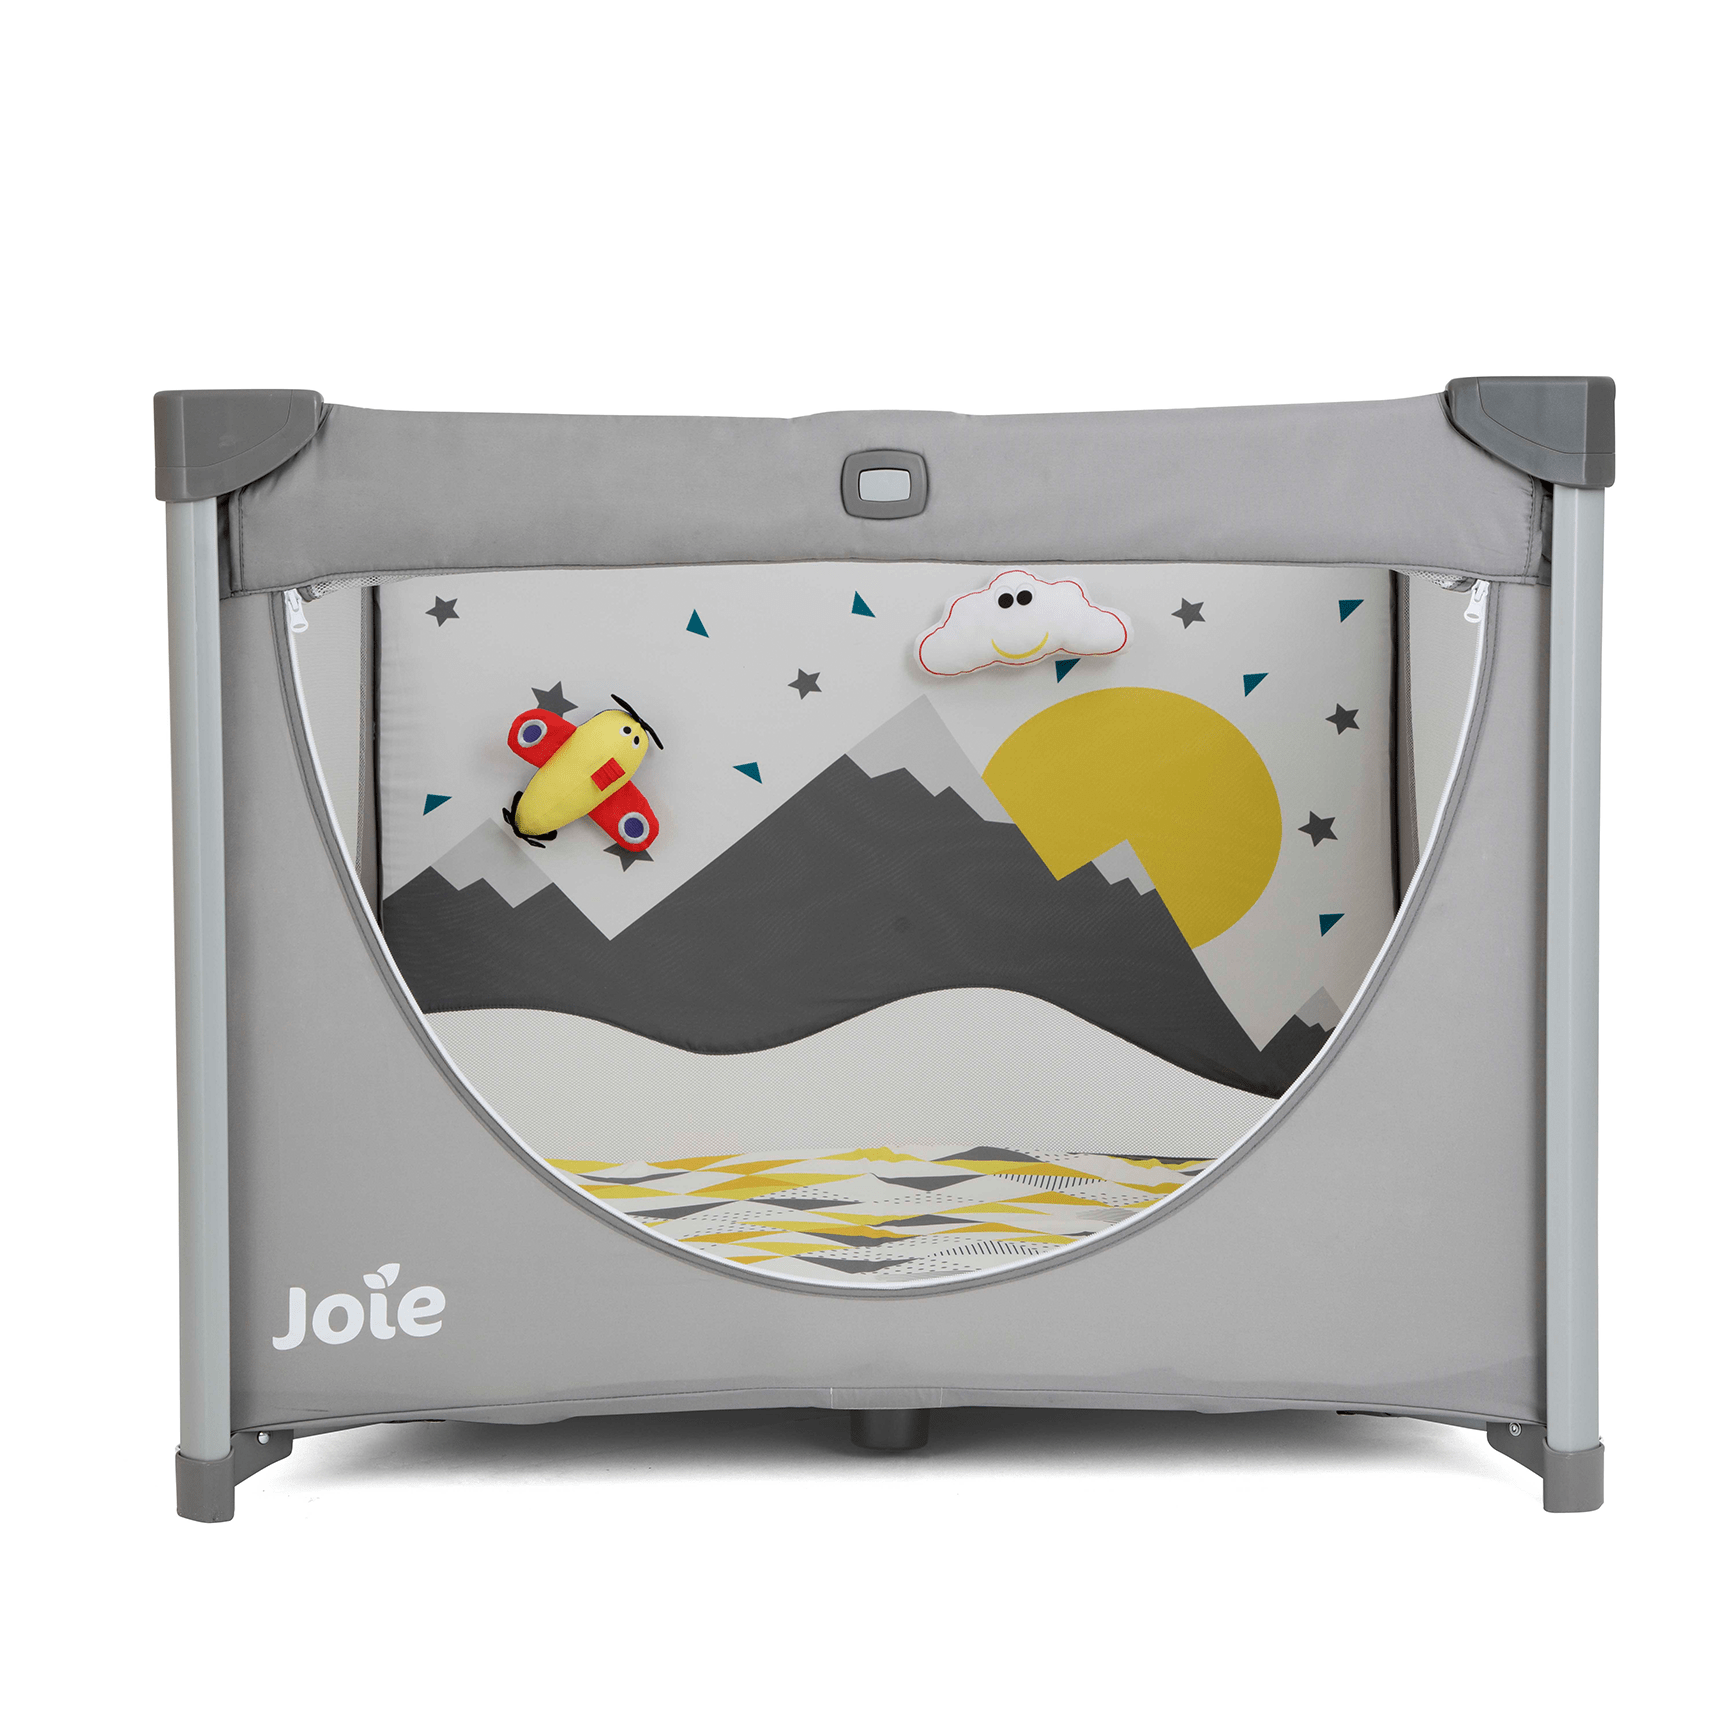 Joie travel cots Joie Cheer Playpen - Little Explorer P1205BALEX000